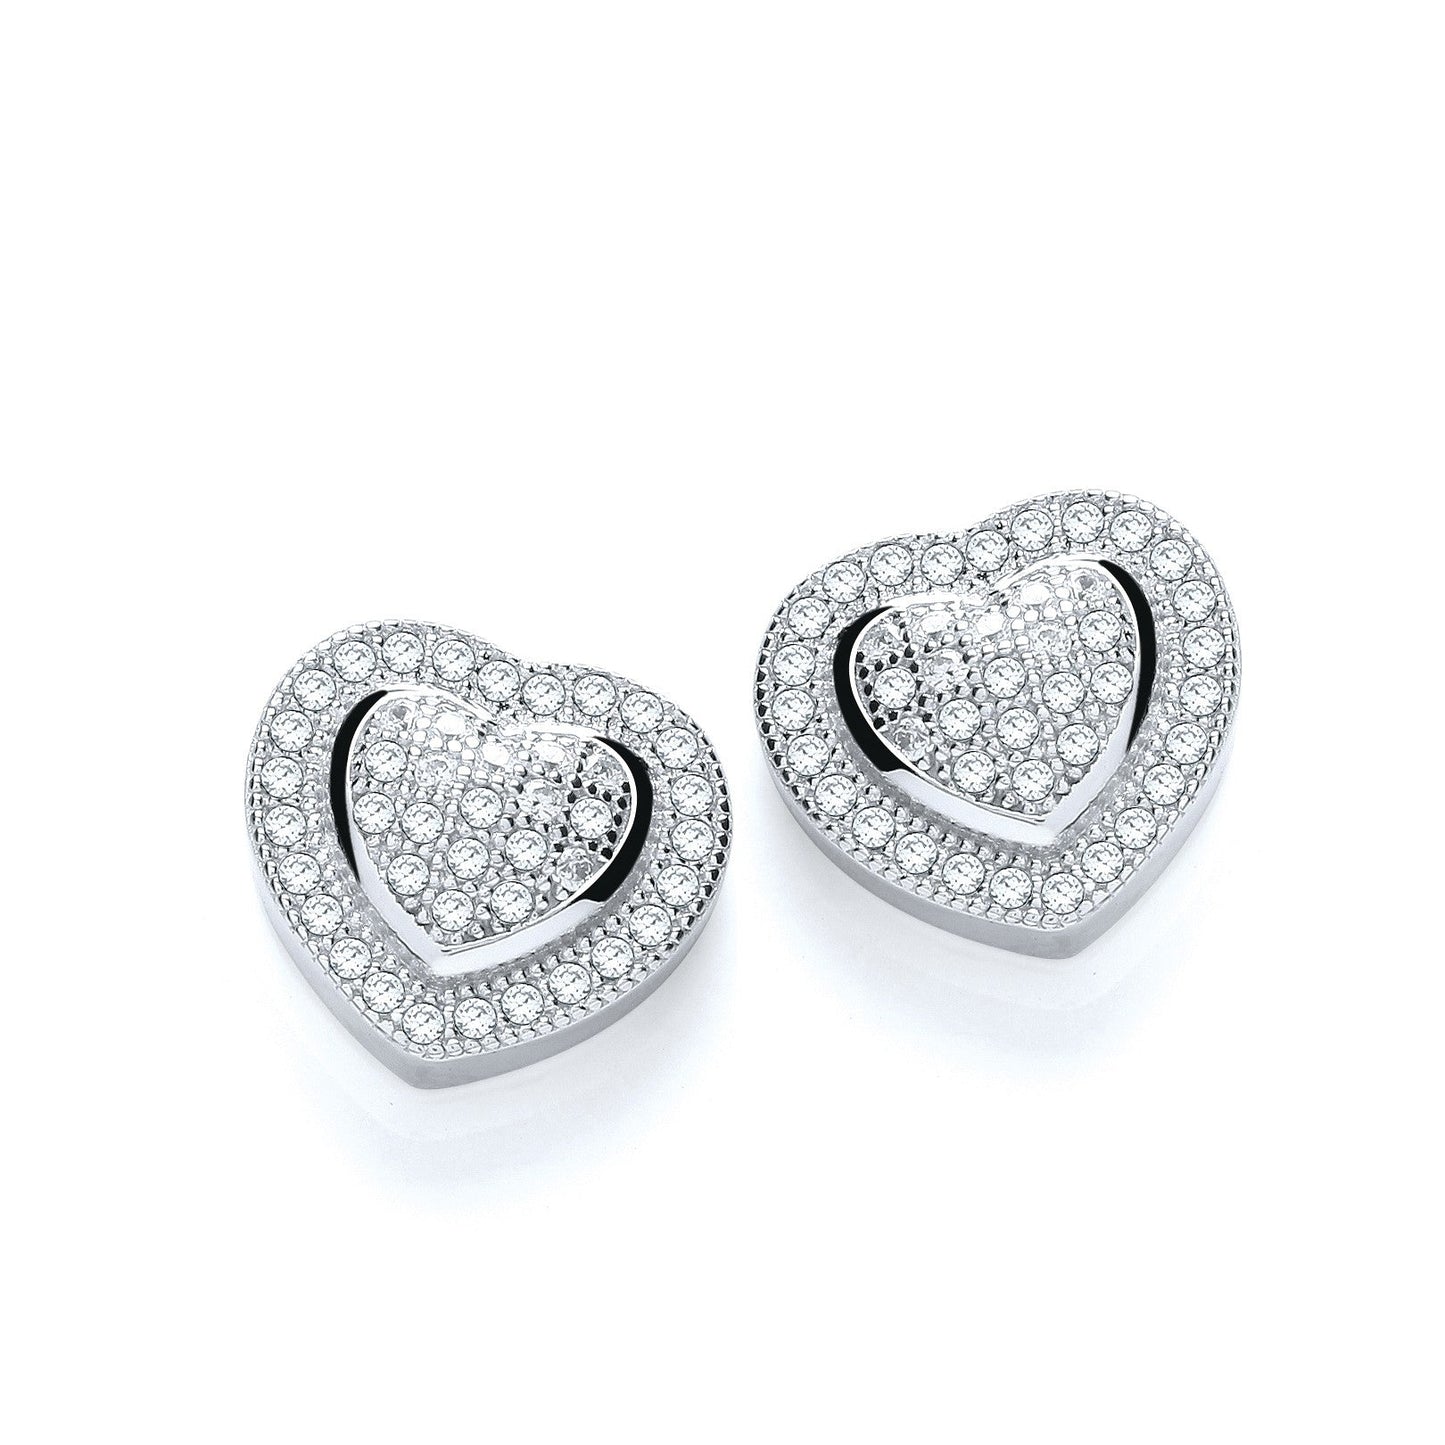 Stud 925 Sterling Silver Heart Earrings Set With CZs - FJewellery